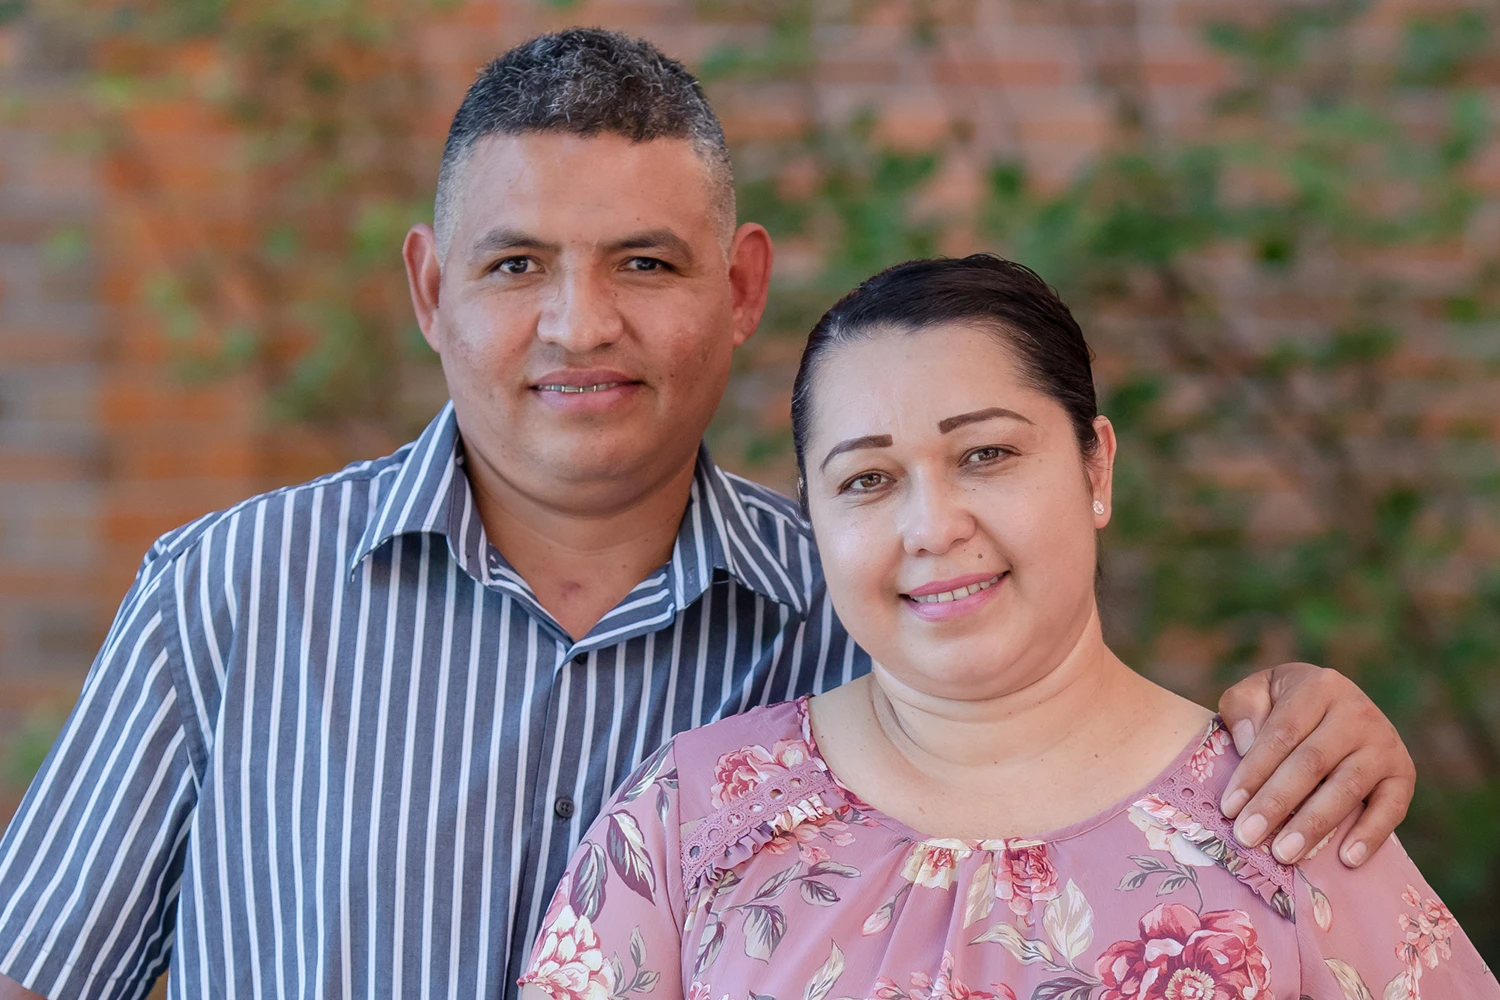 Morris Sandoval and his wife, Rebeca Ayala